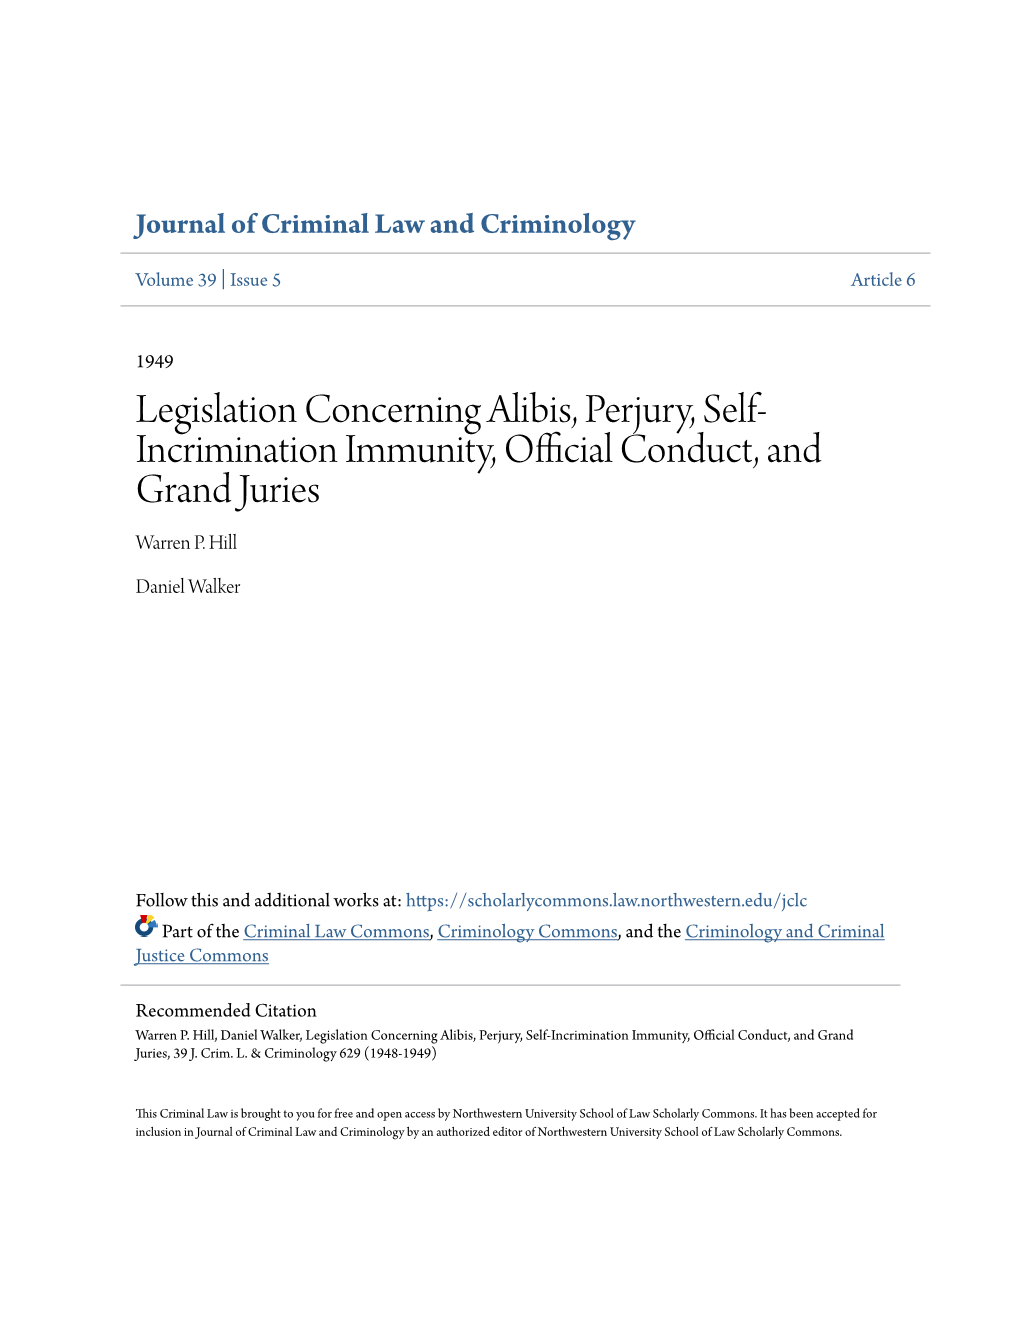 Legislation Concerning Alibis, Perjury, Self-Incrimination Immunity, Official Conduct, and Grand Juries, 39 J